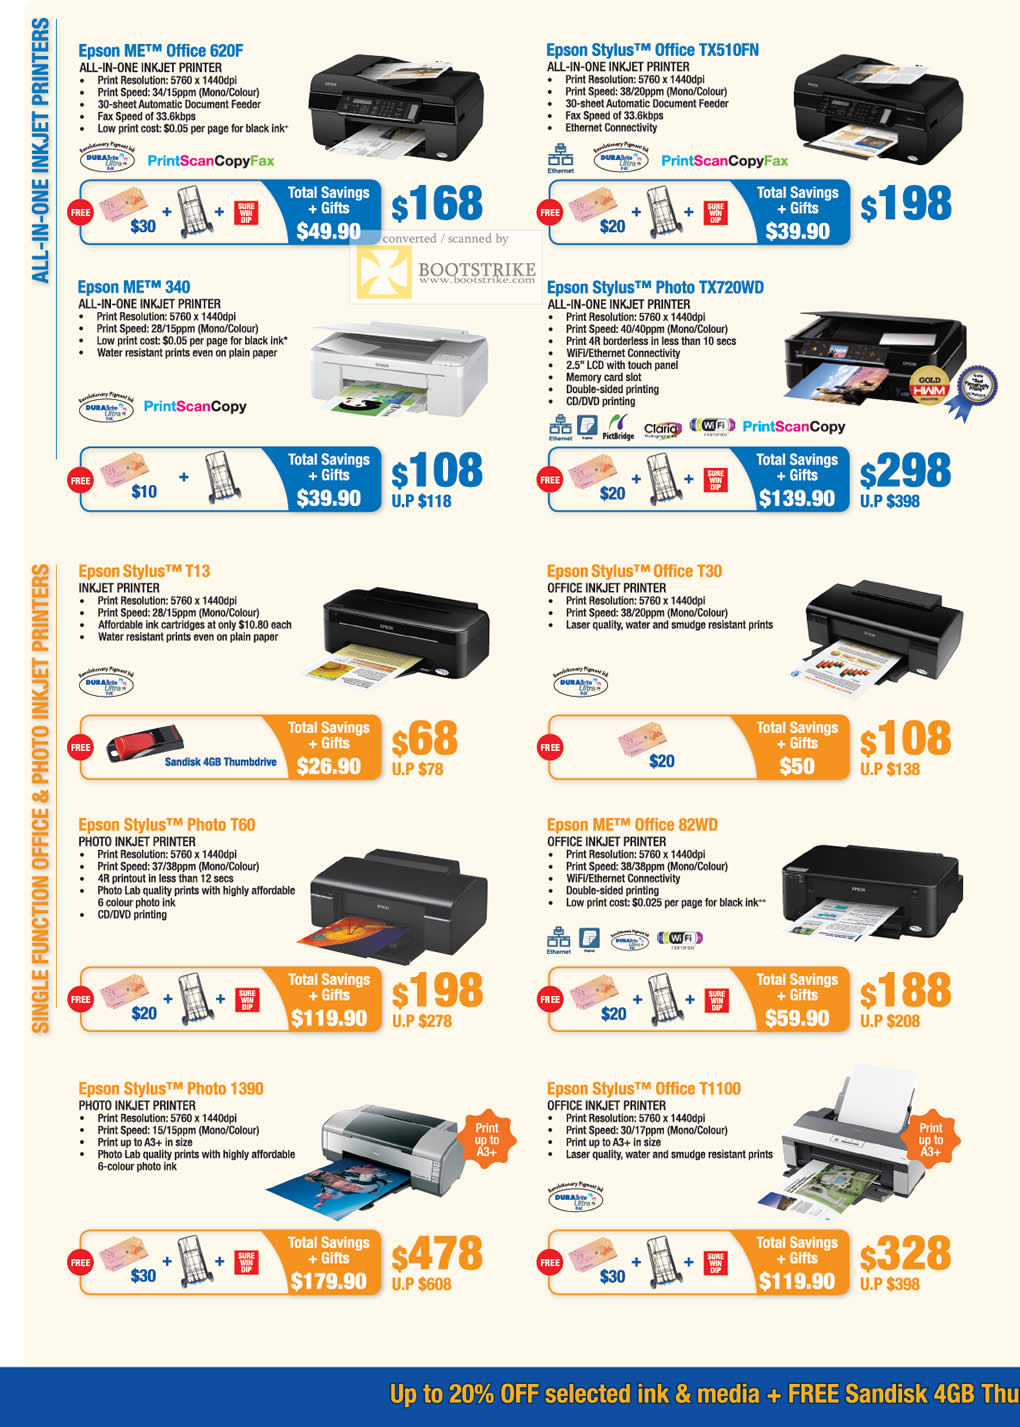 SITEX 2011 price list image brochure of Epson Printers Inkjet ME Office 620F, Stylus Office TX510FN, 340, Photo TX720WD, Stylus T13, Office T30, T60, 82WD, Photo 1390, Office T1100